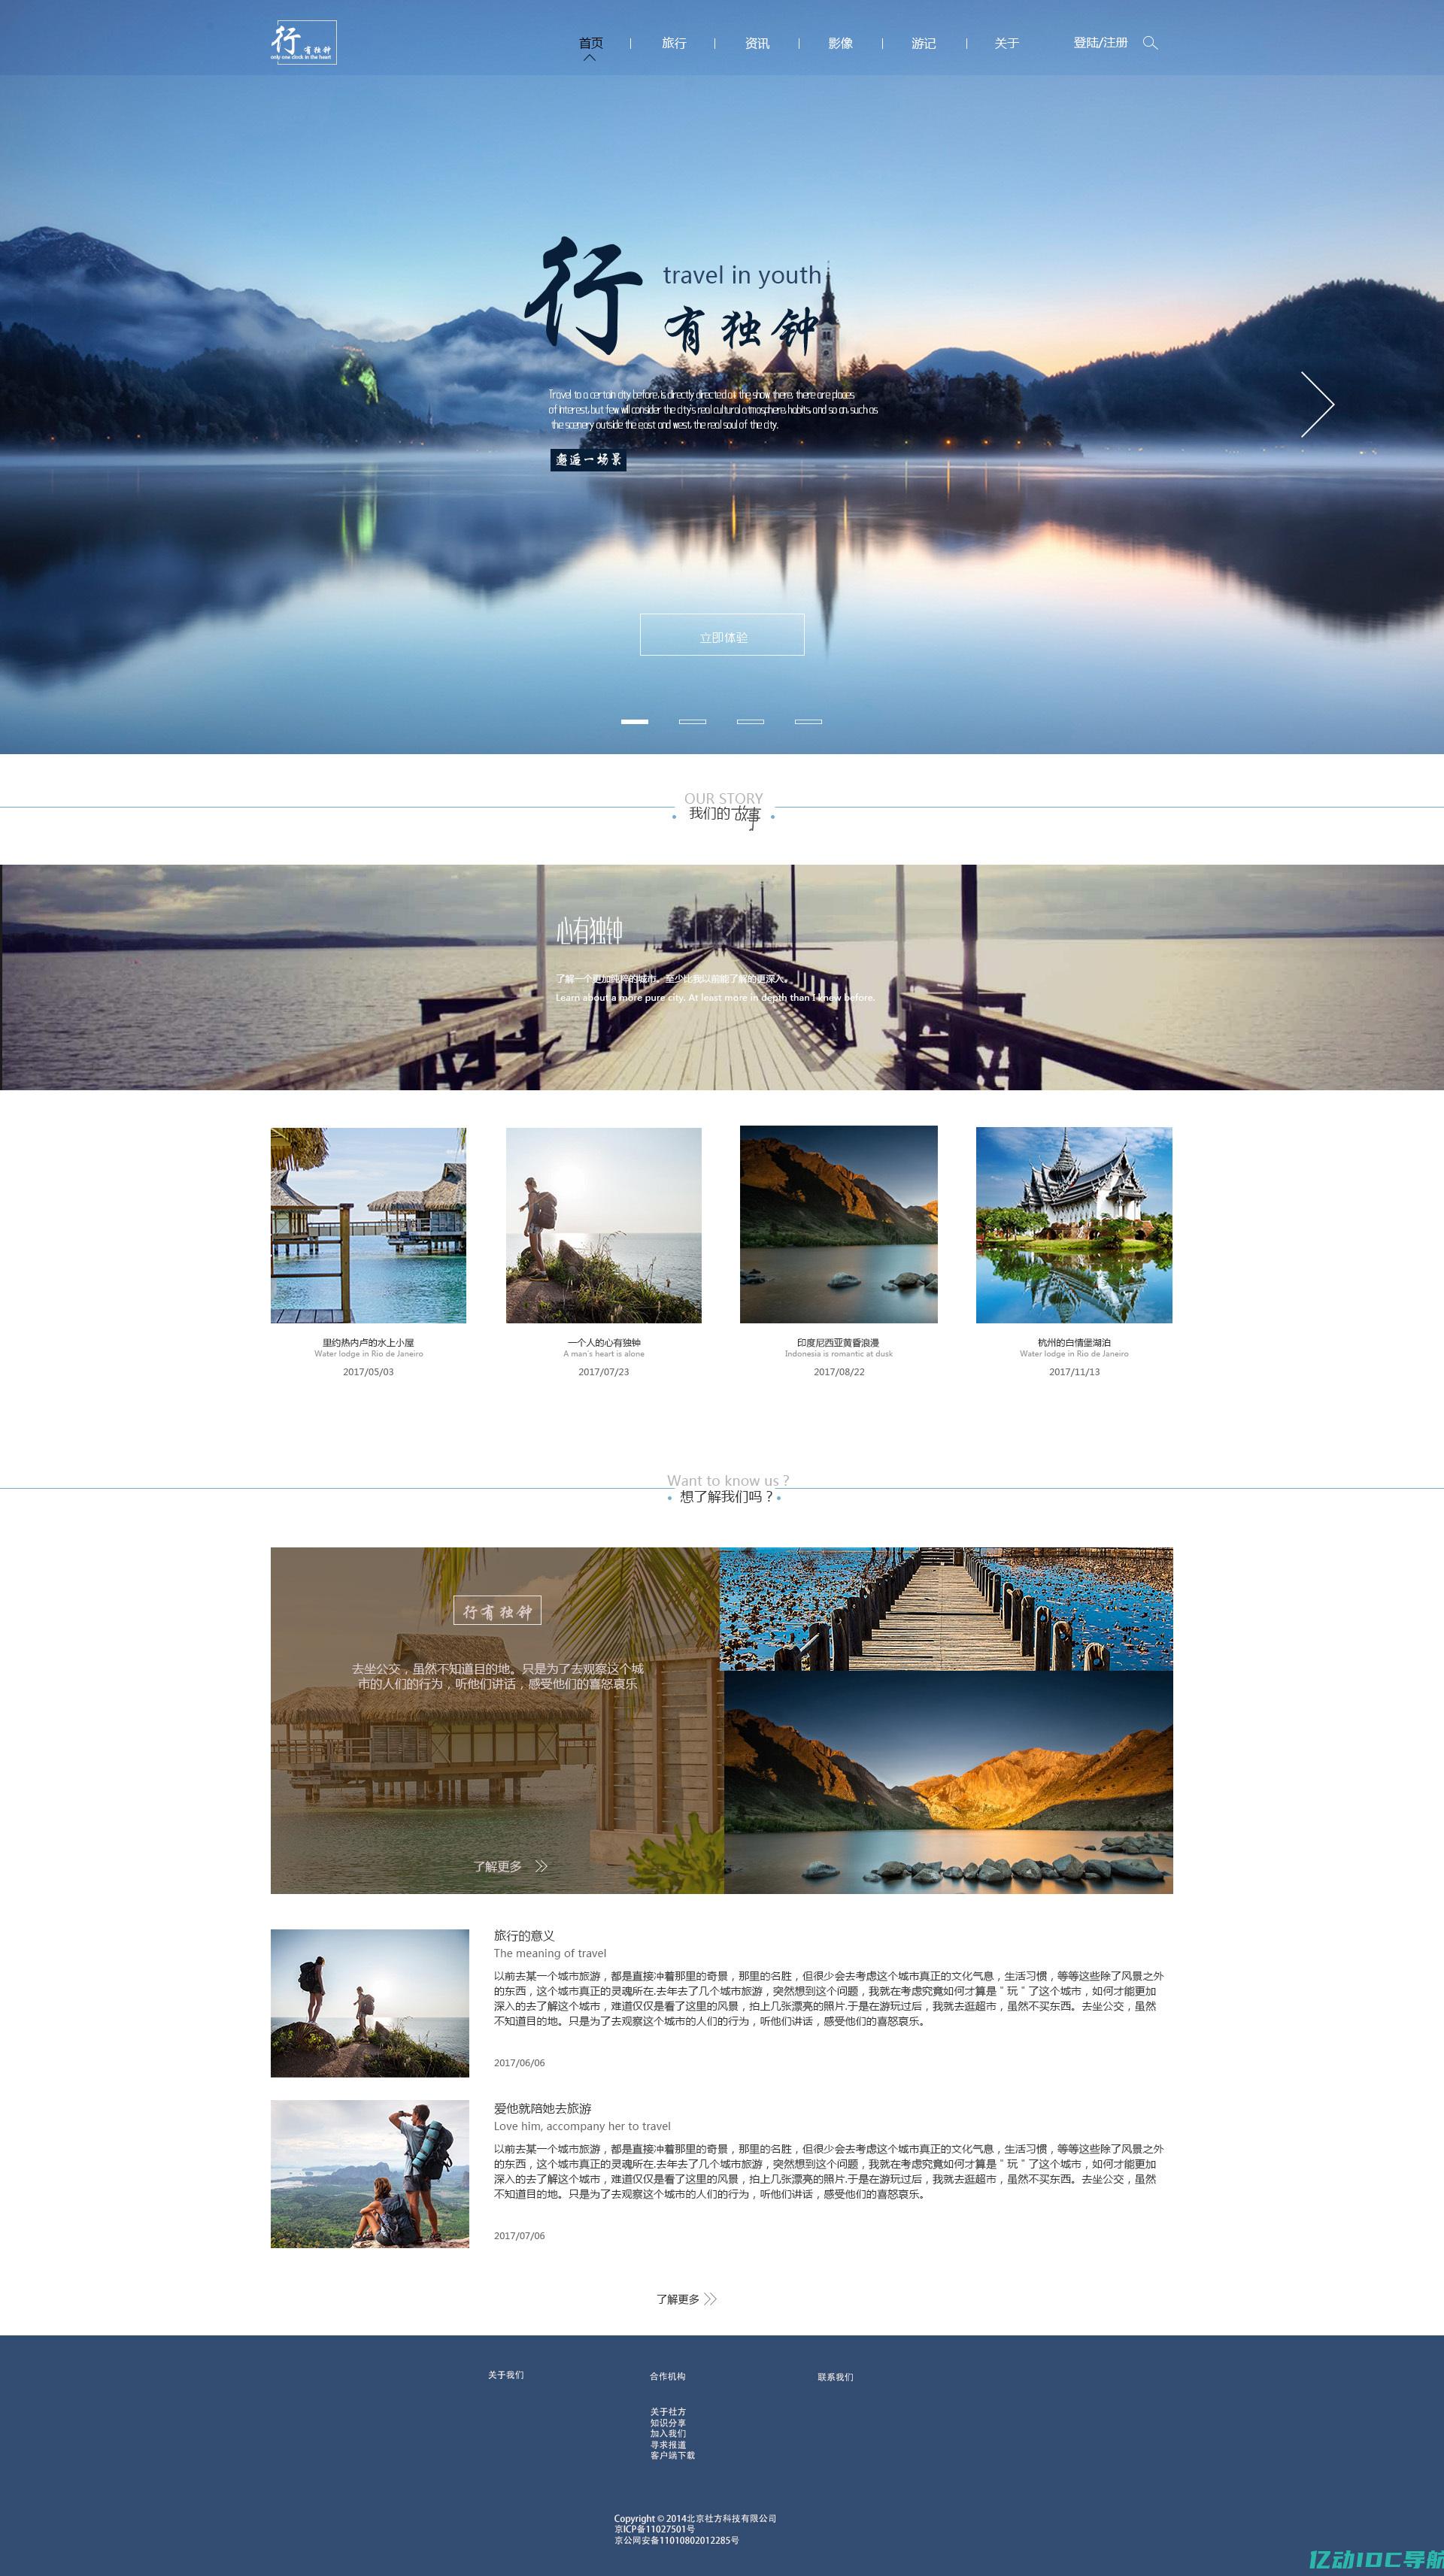 html旅游网站模板 (旅游网站模板 - 精美设计和用户友好界面)